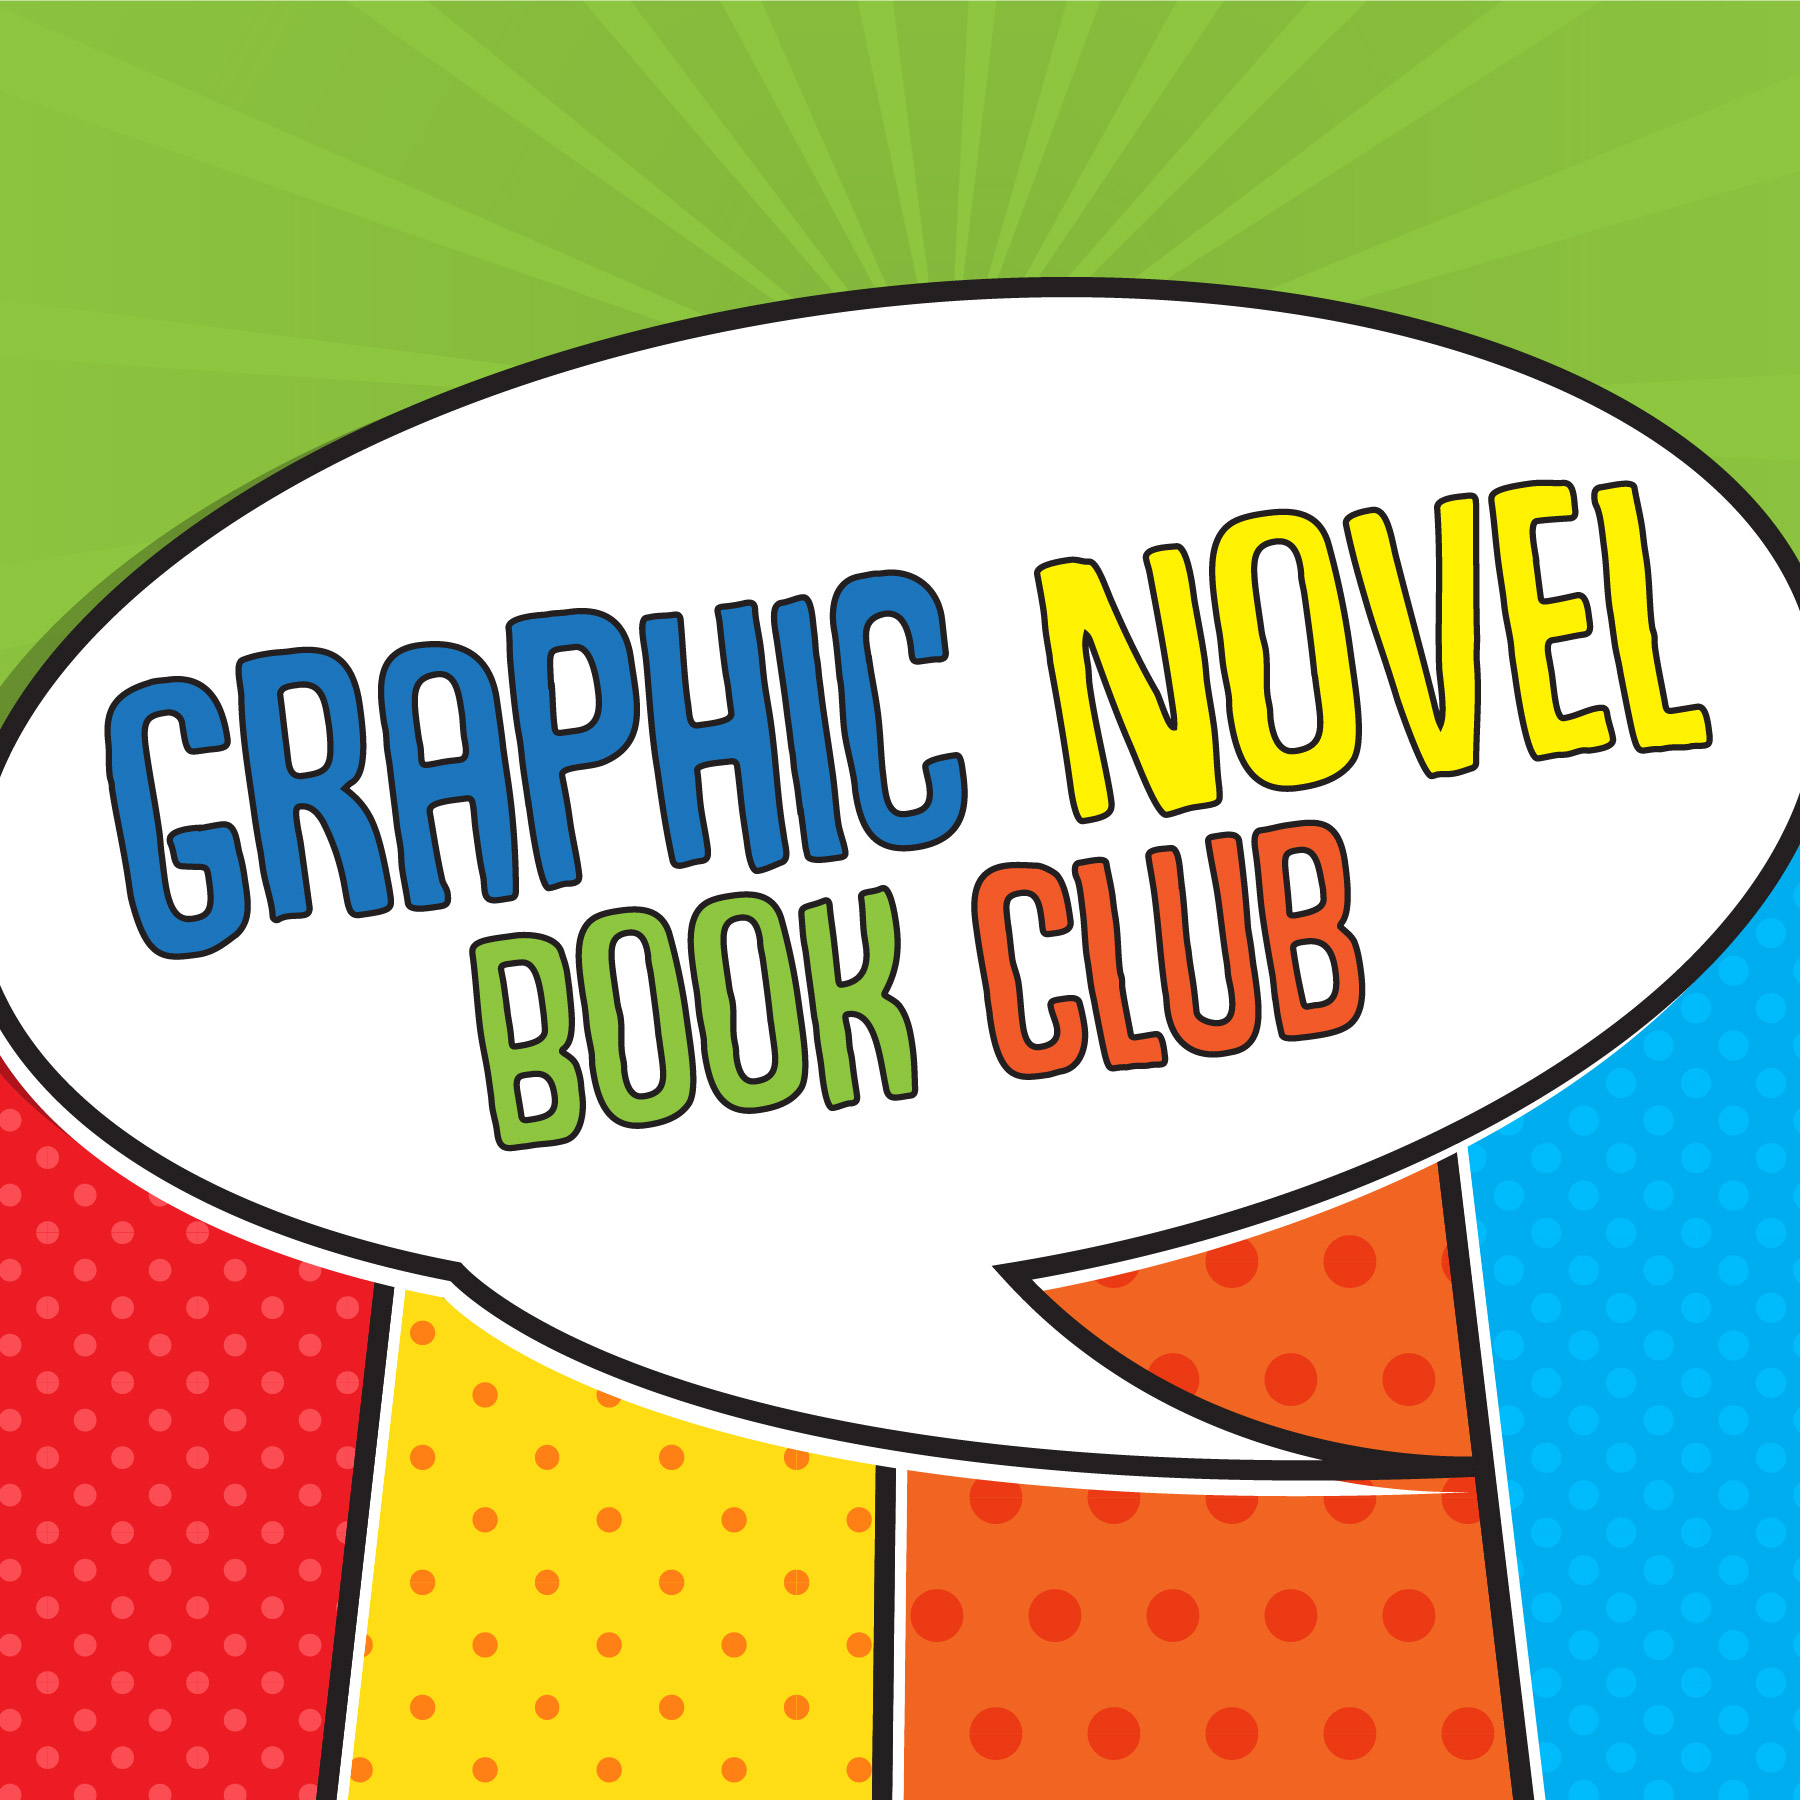 "Graphic Novel Book Club" text in a cartoon speech bubble